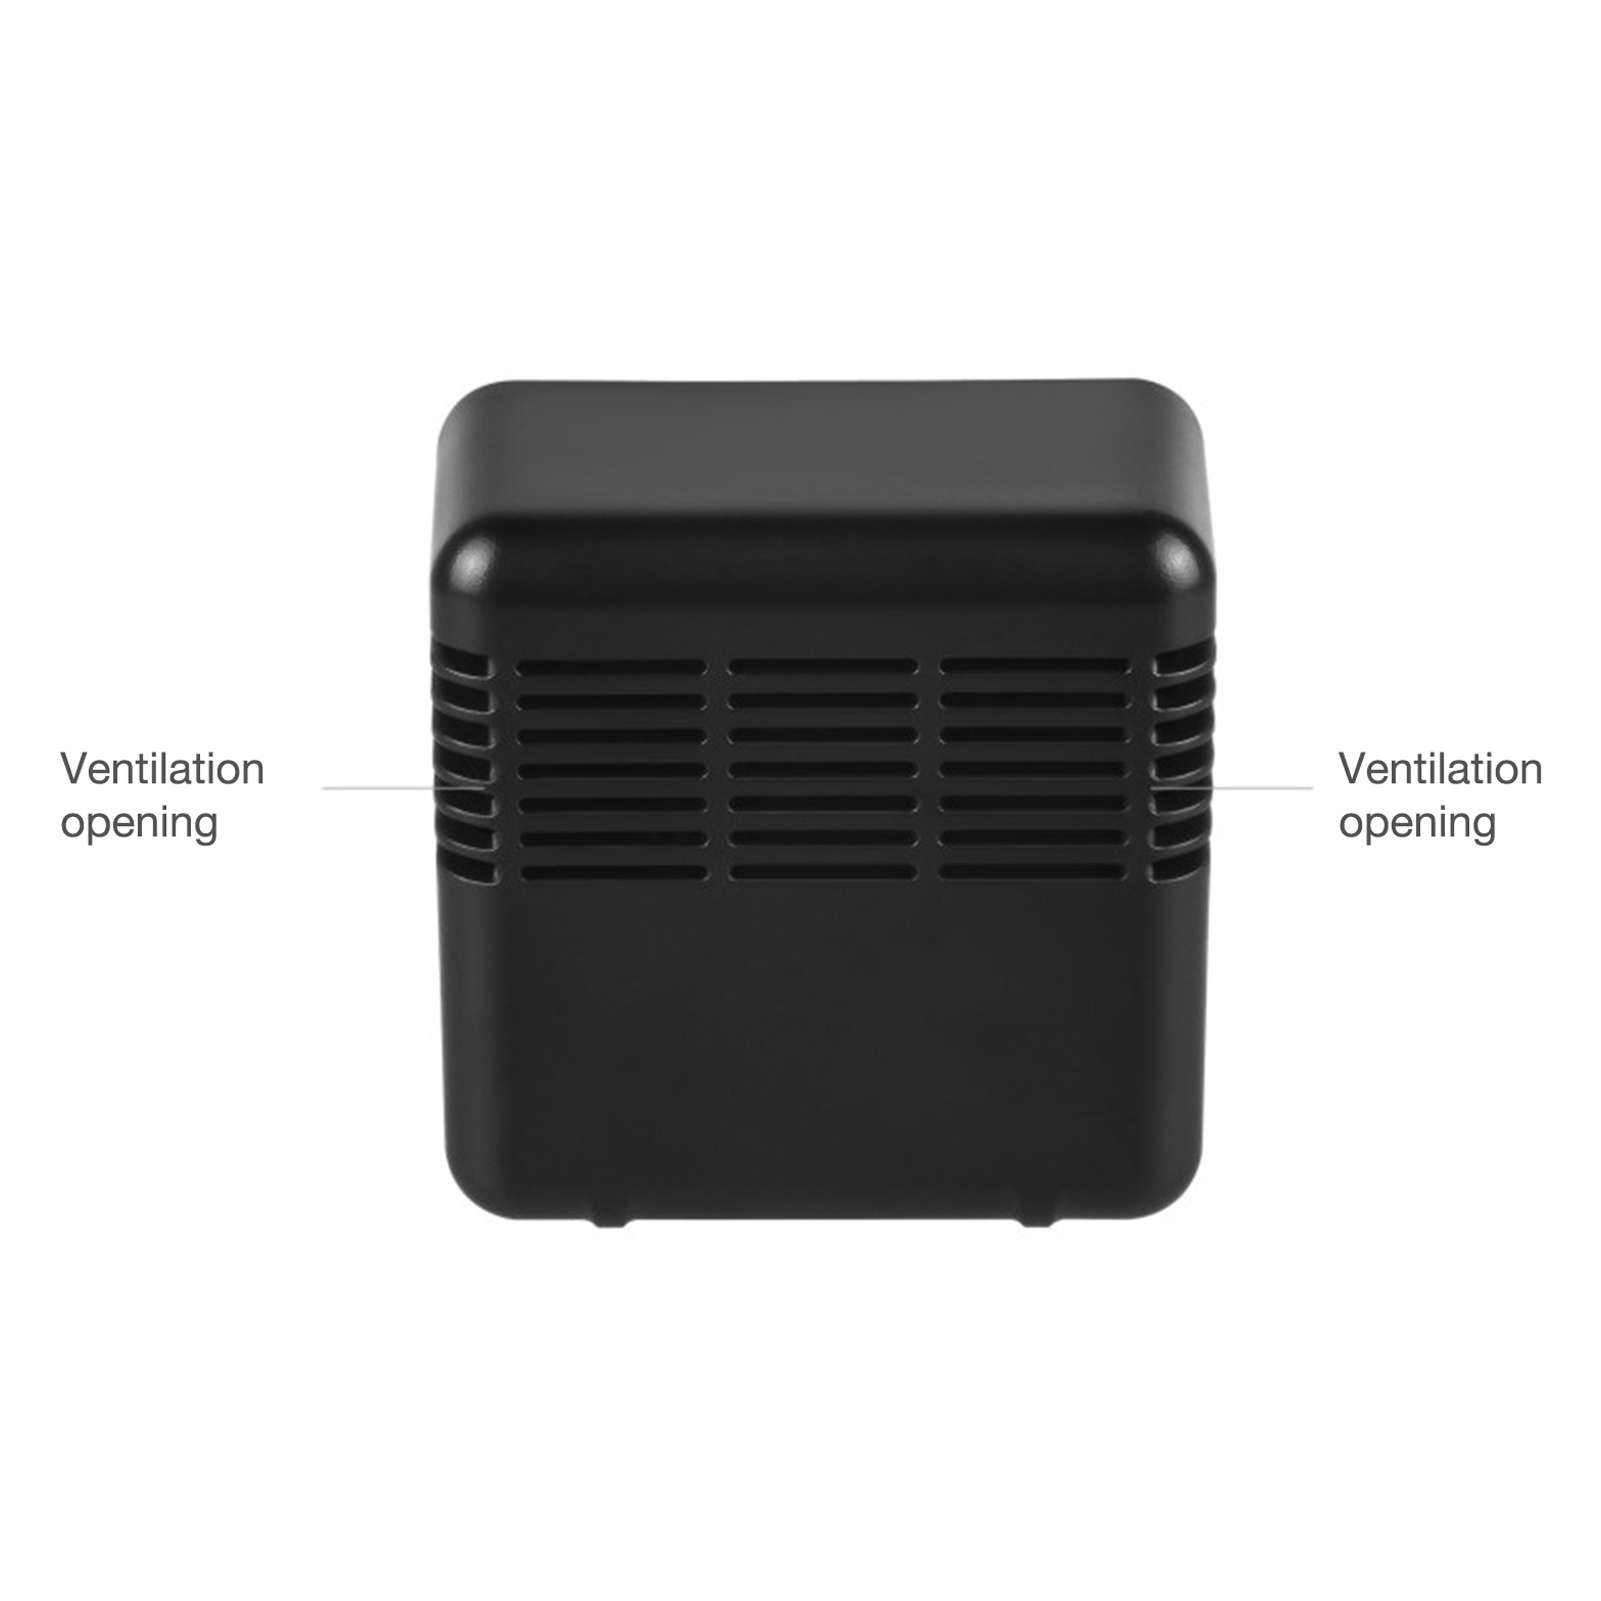 CO2-Meter-Digital-Temperature-Humidity-Sensor-Tester-Air-Quality-Monitor-Carbon-Dioxide-TVOC-Formald-1824199-12